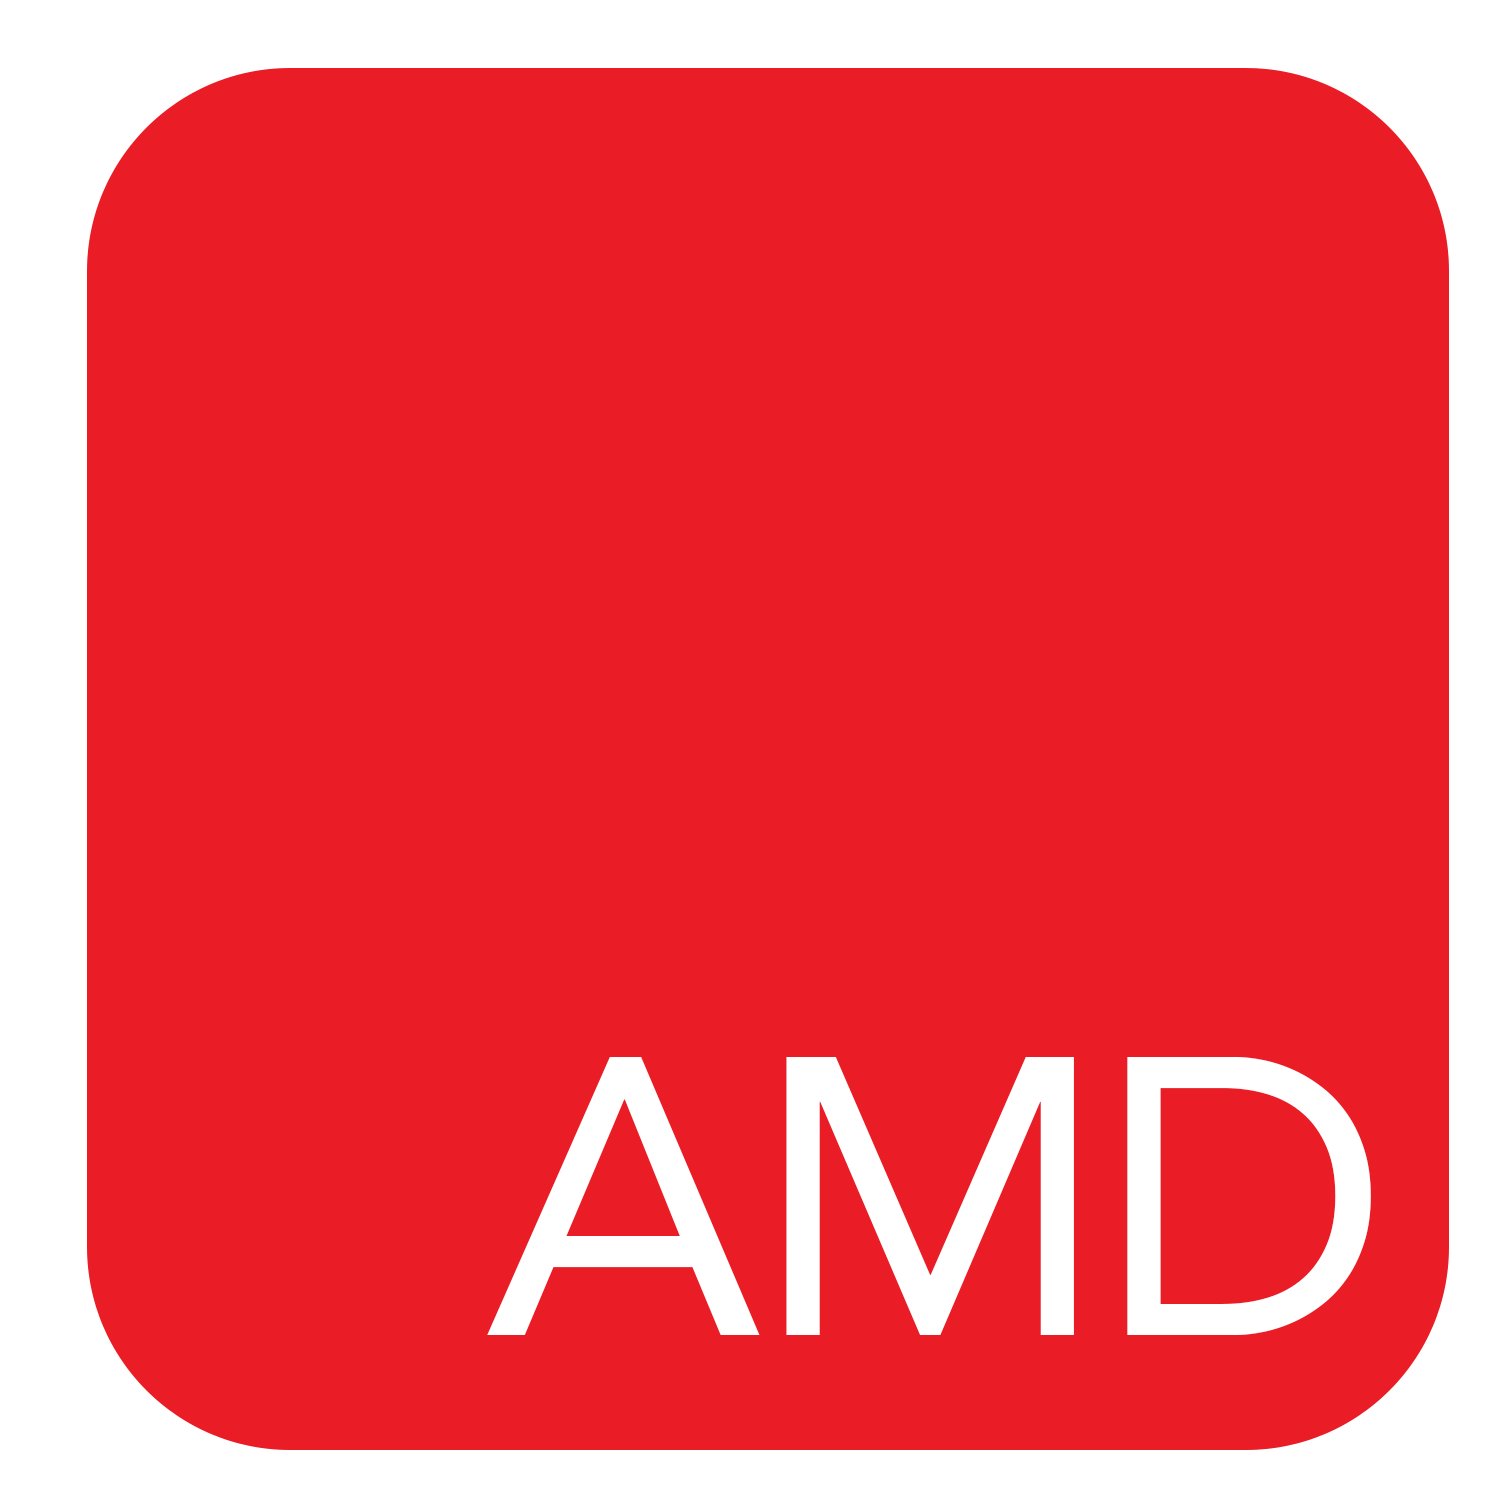 AMD Logo - AMD Logo